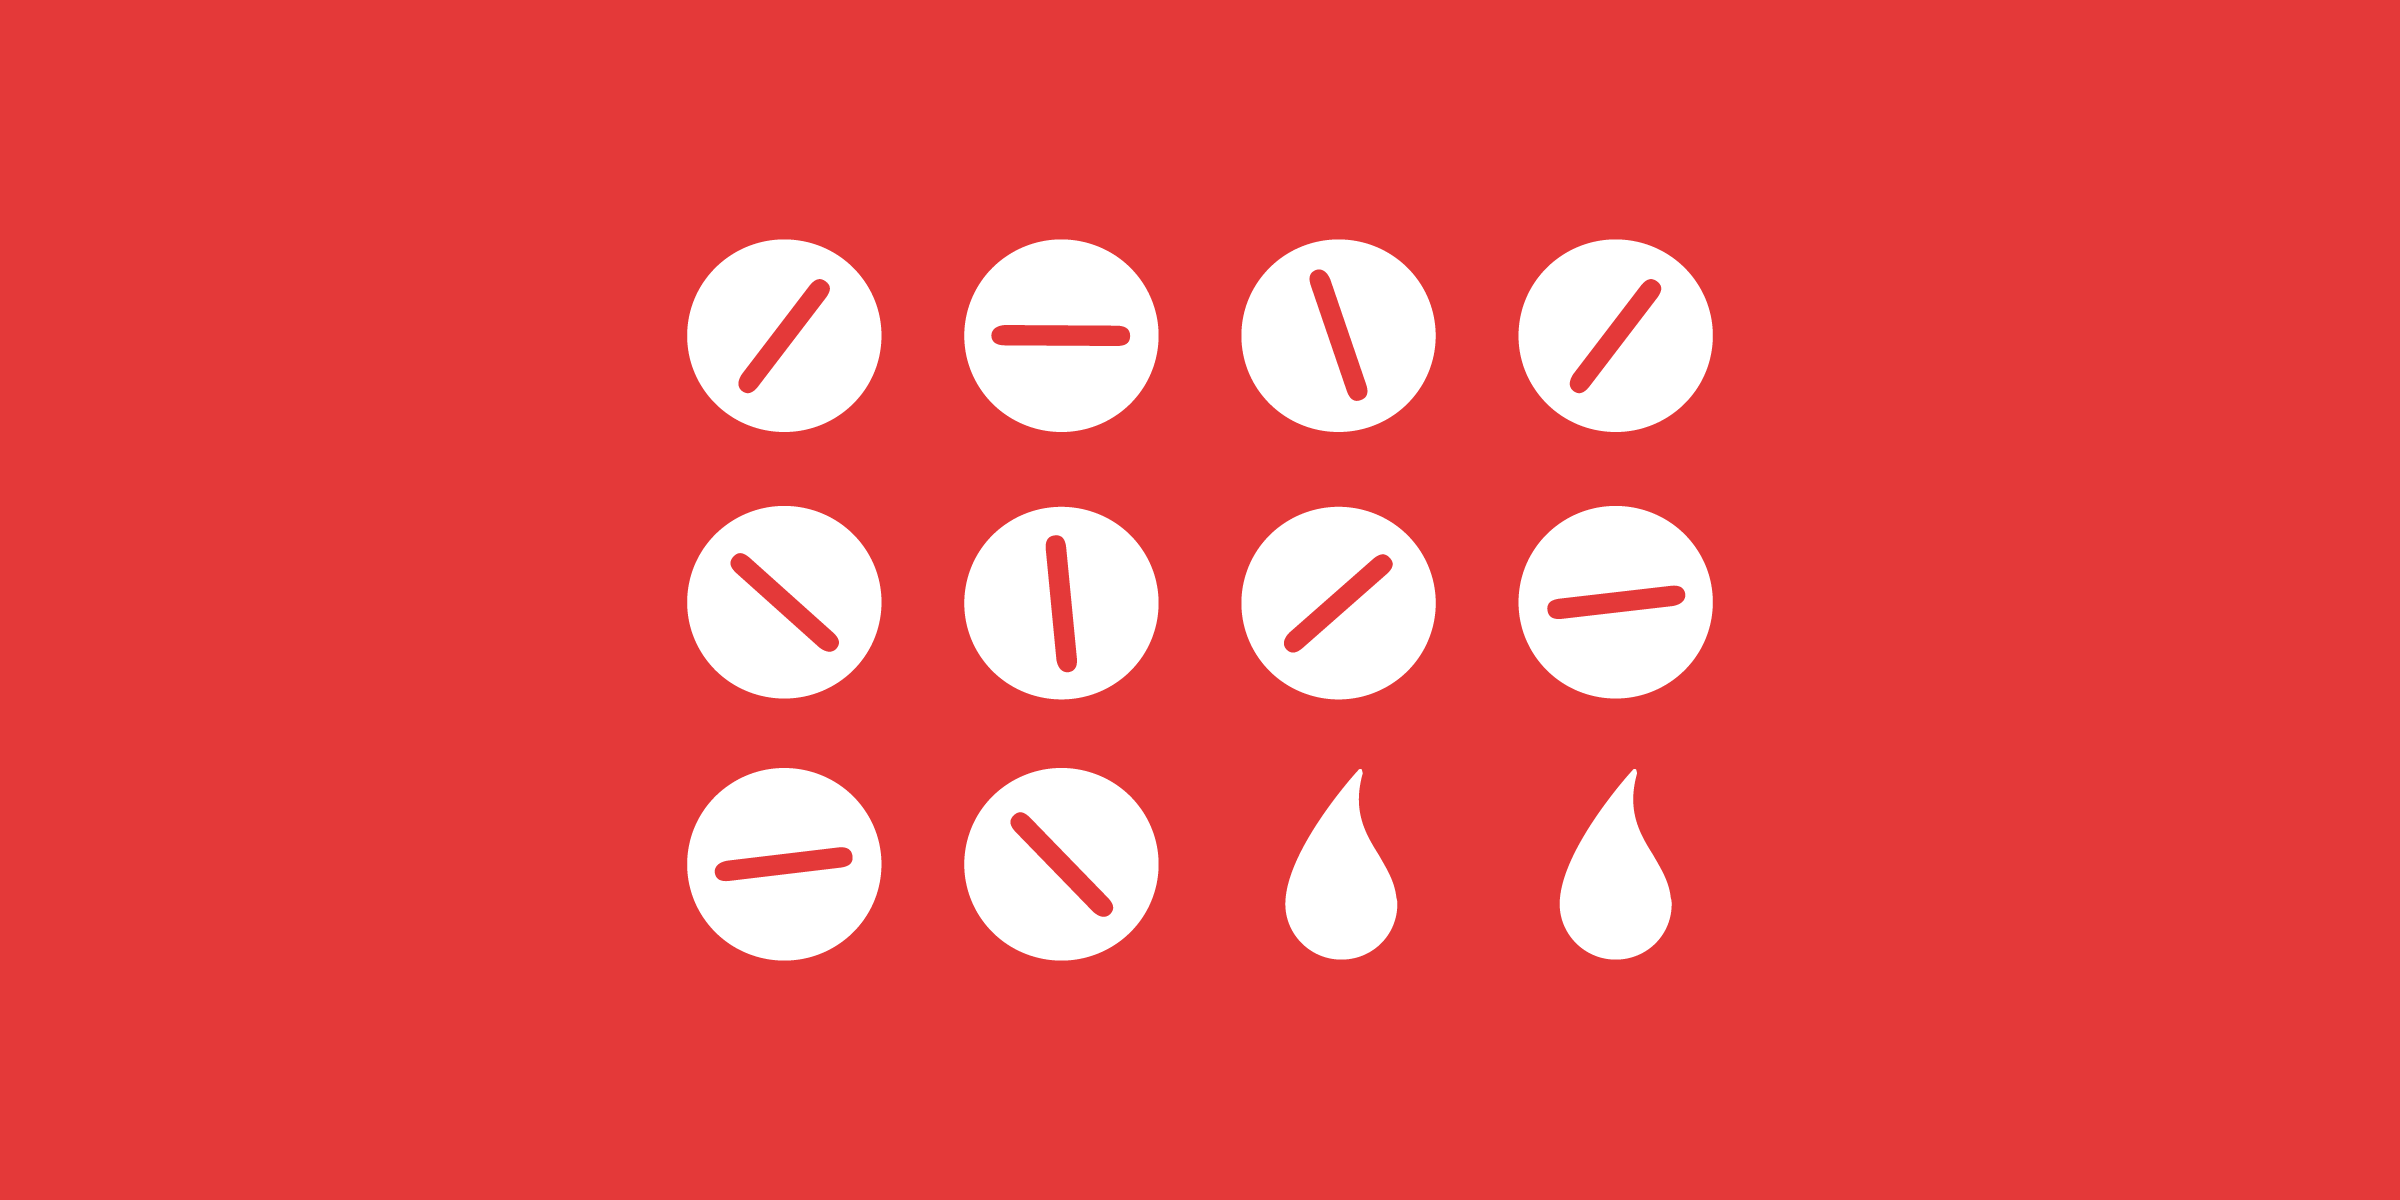 píldoras anticonceptivas ilustradas en rojo